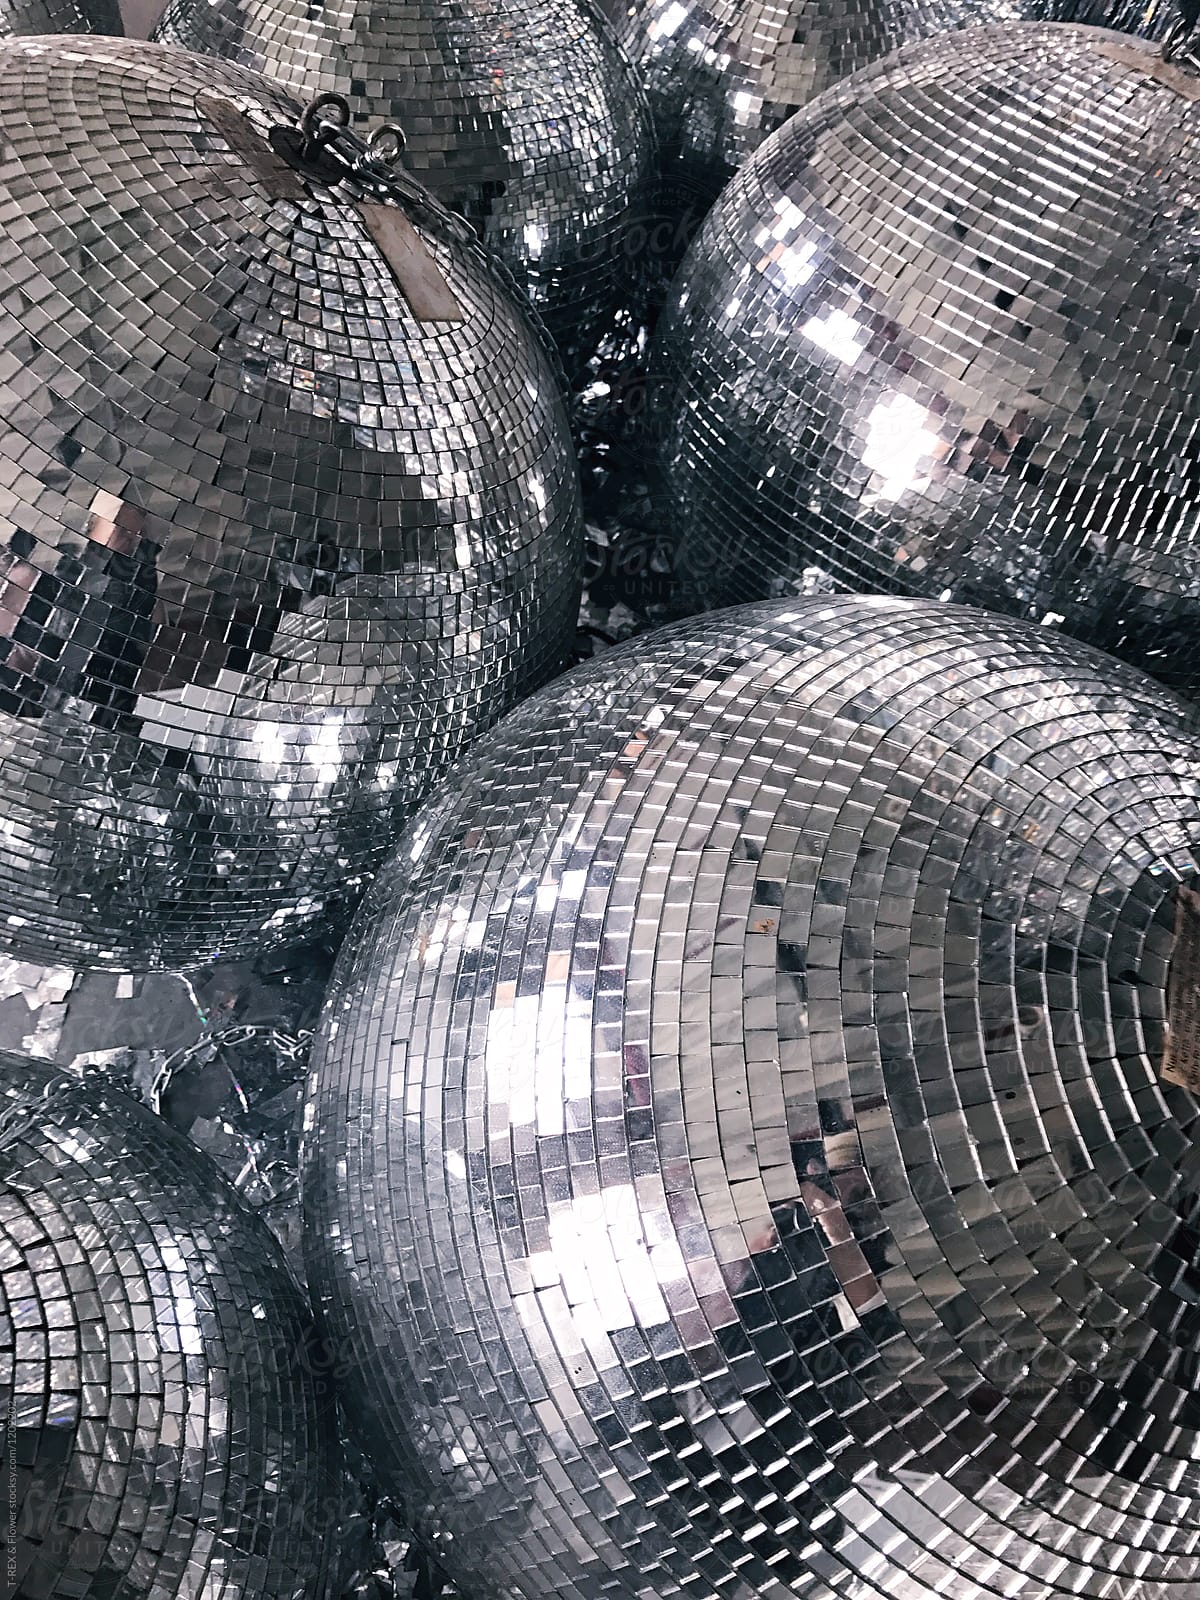 Shiny disco balls.